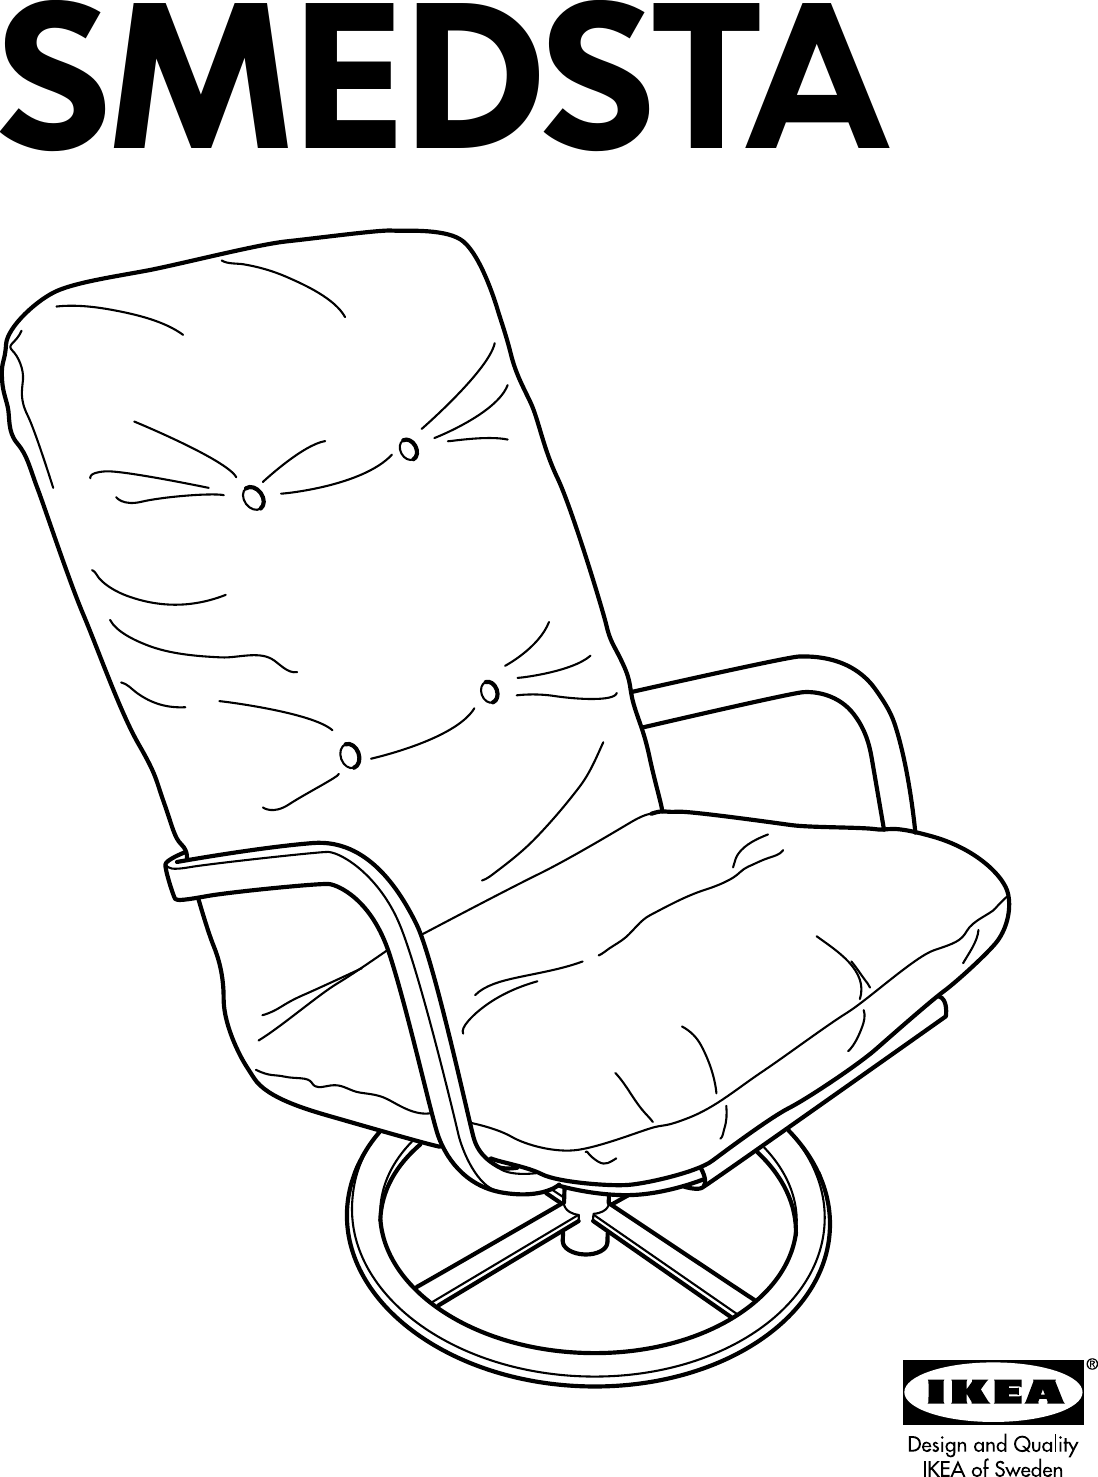 Page 1 of 8 - Ikea Ikea-Smedsta-Swivel-Chair-Frame-Assembly-Instruction